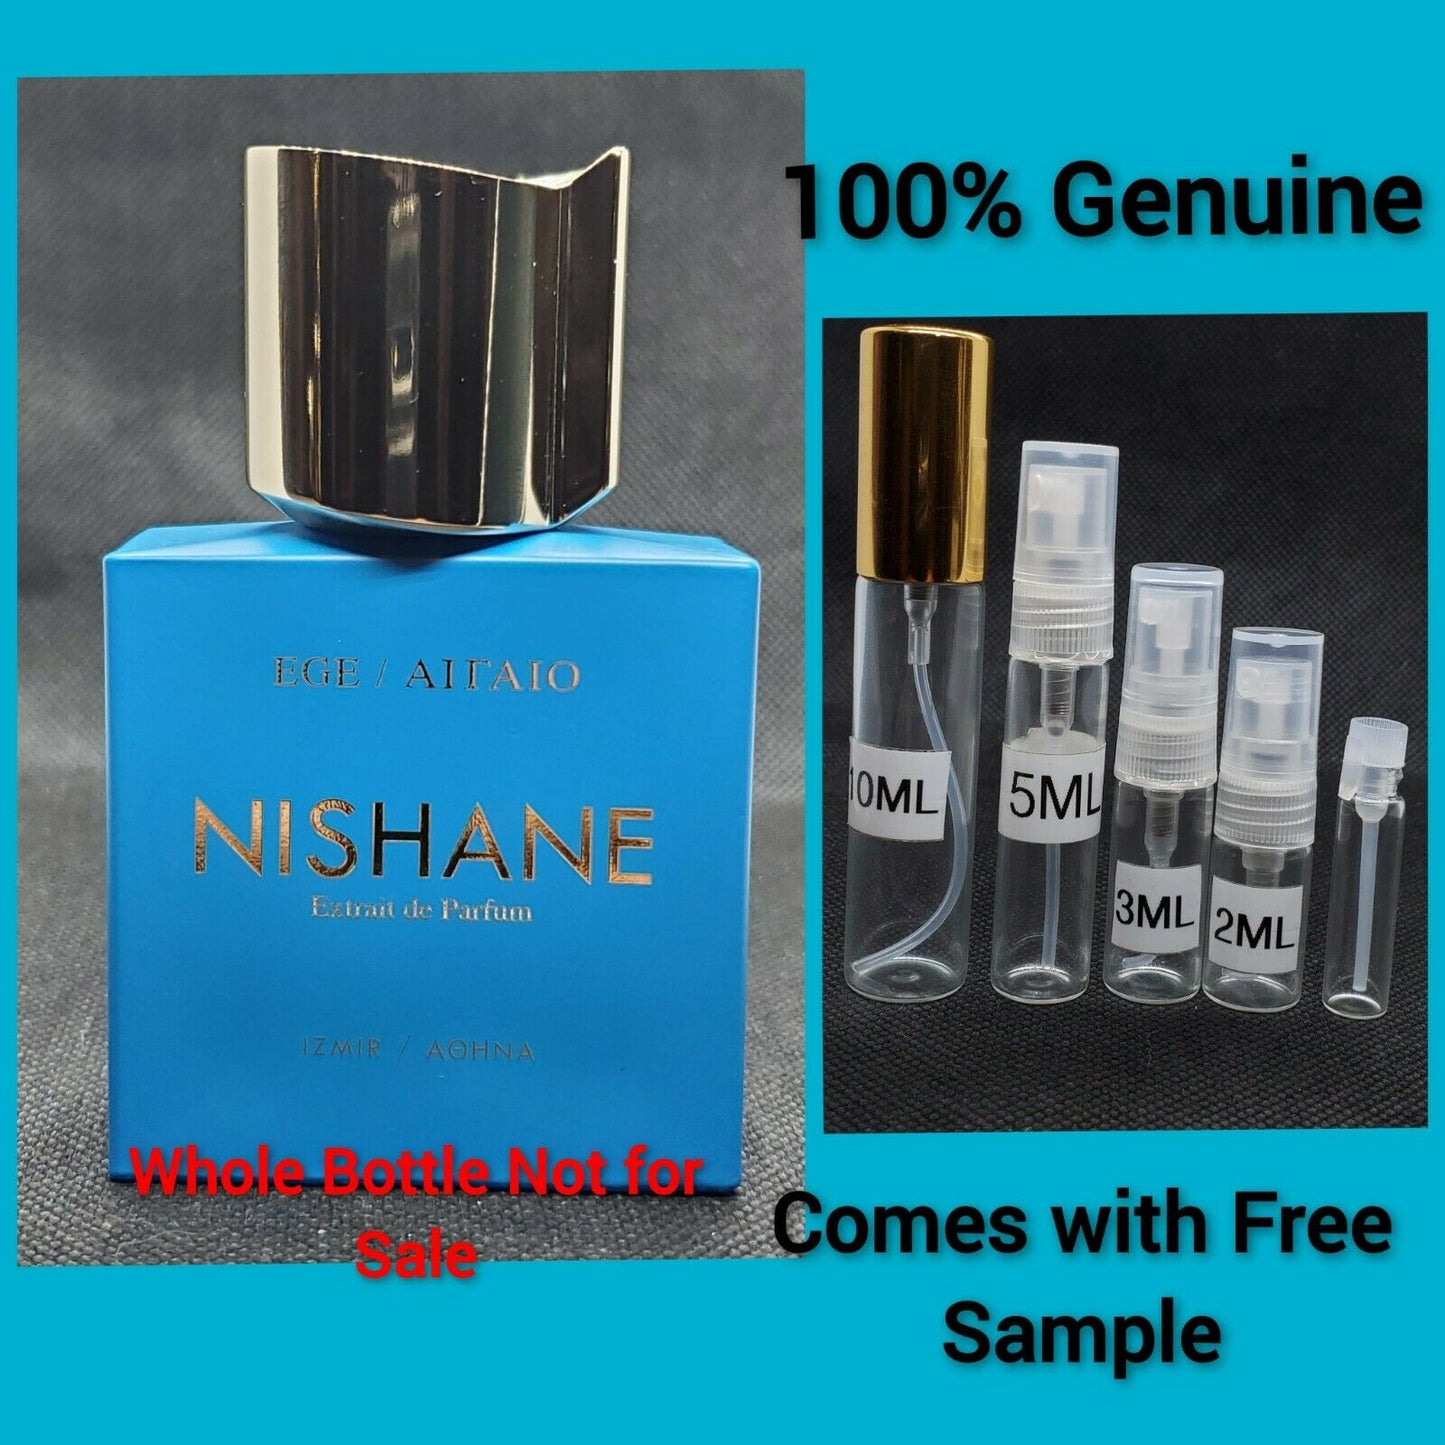 Nishane Ege *New Release* Samples Plus Free Sample+bag